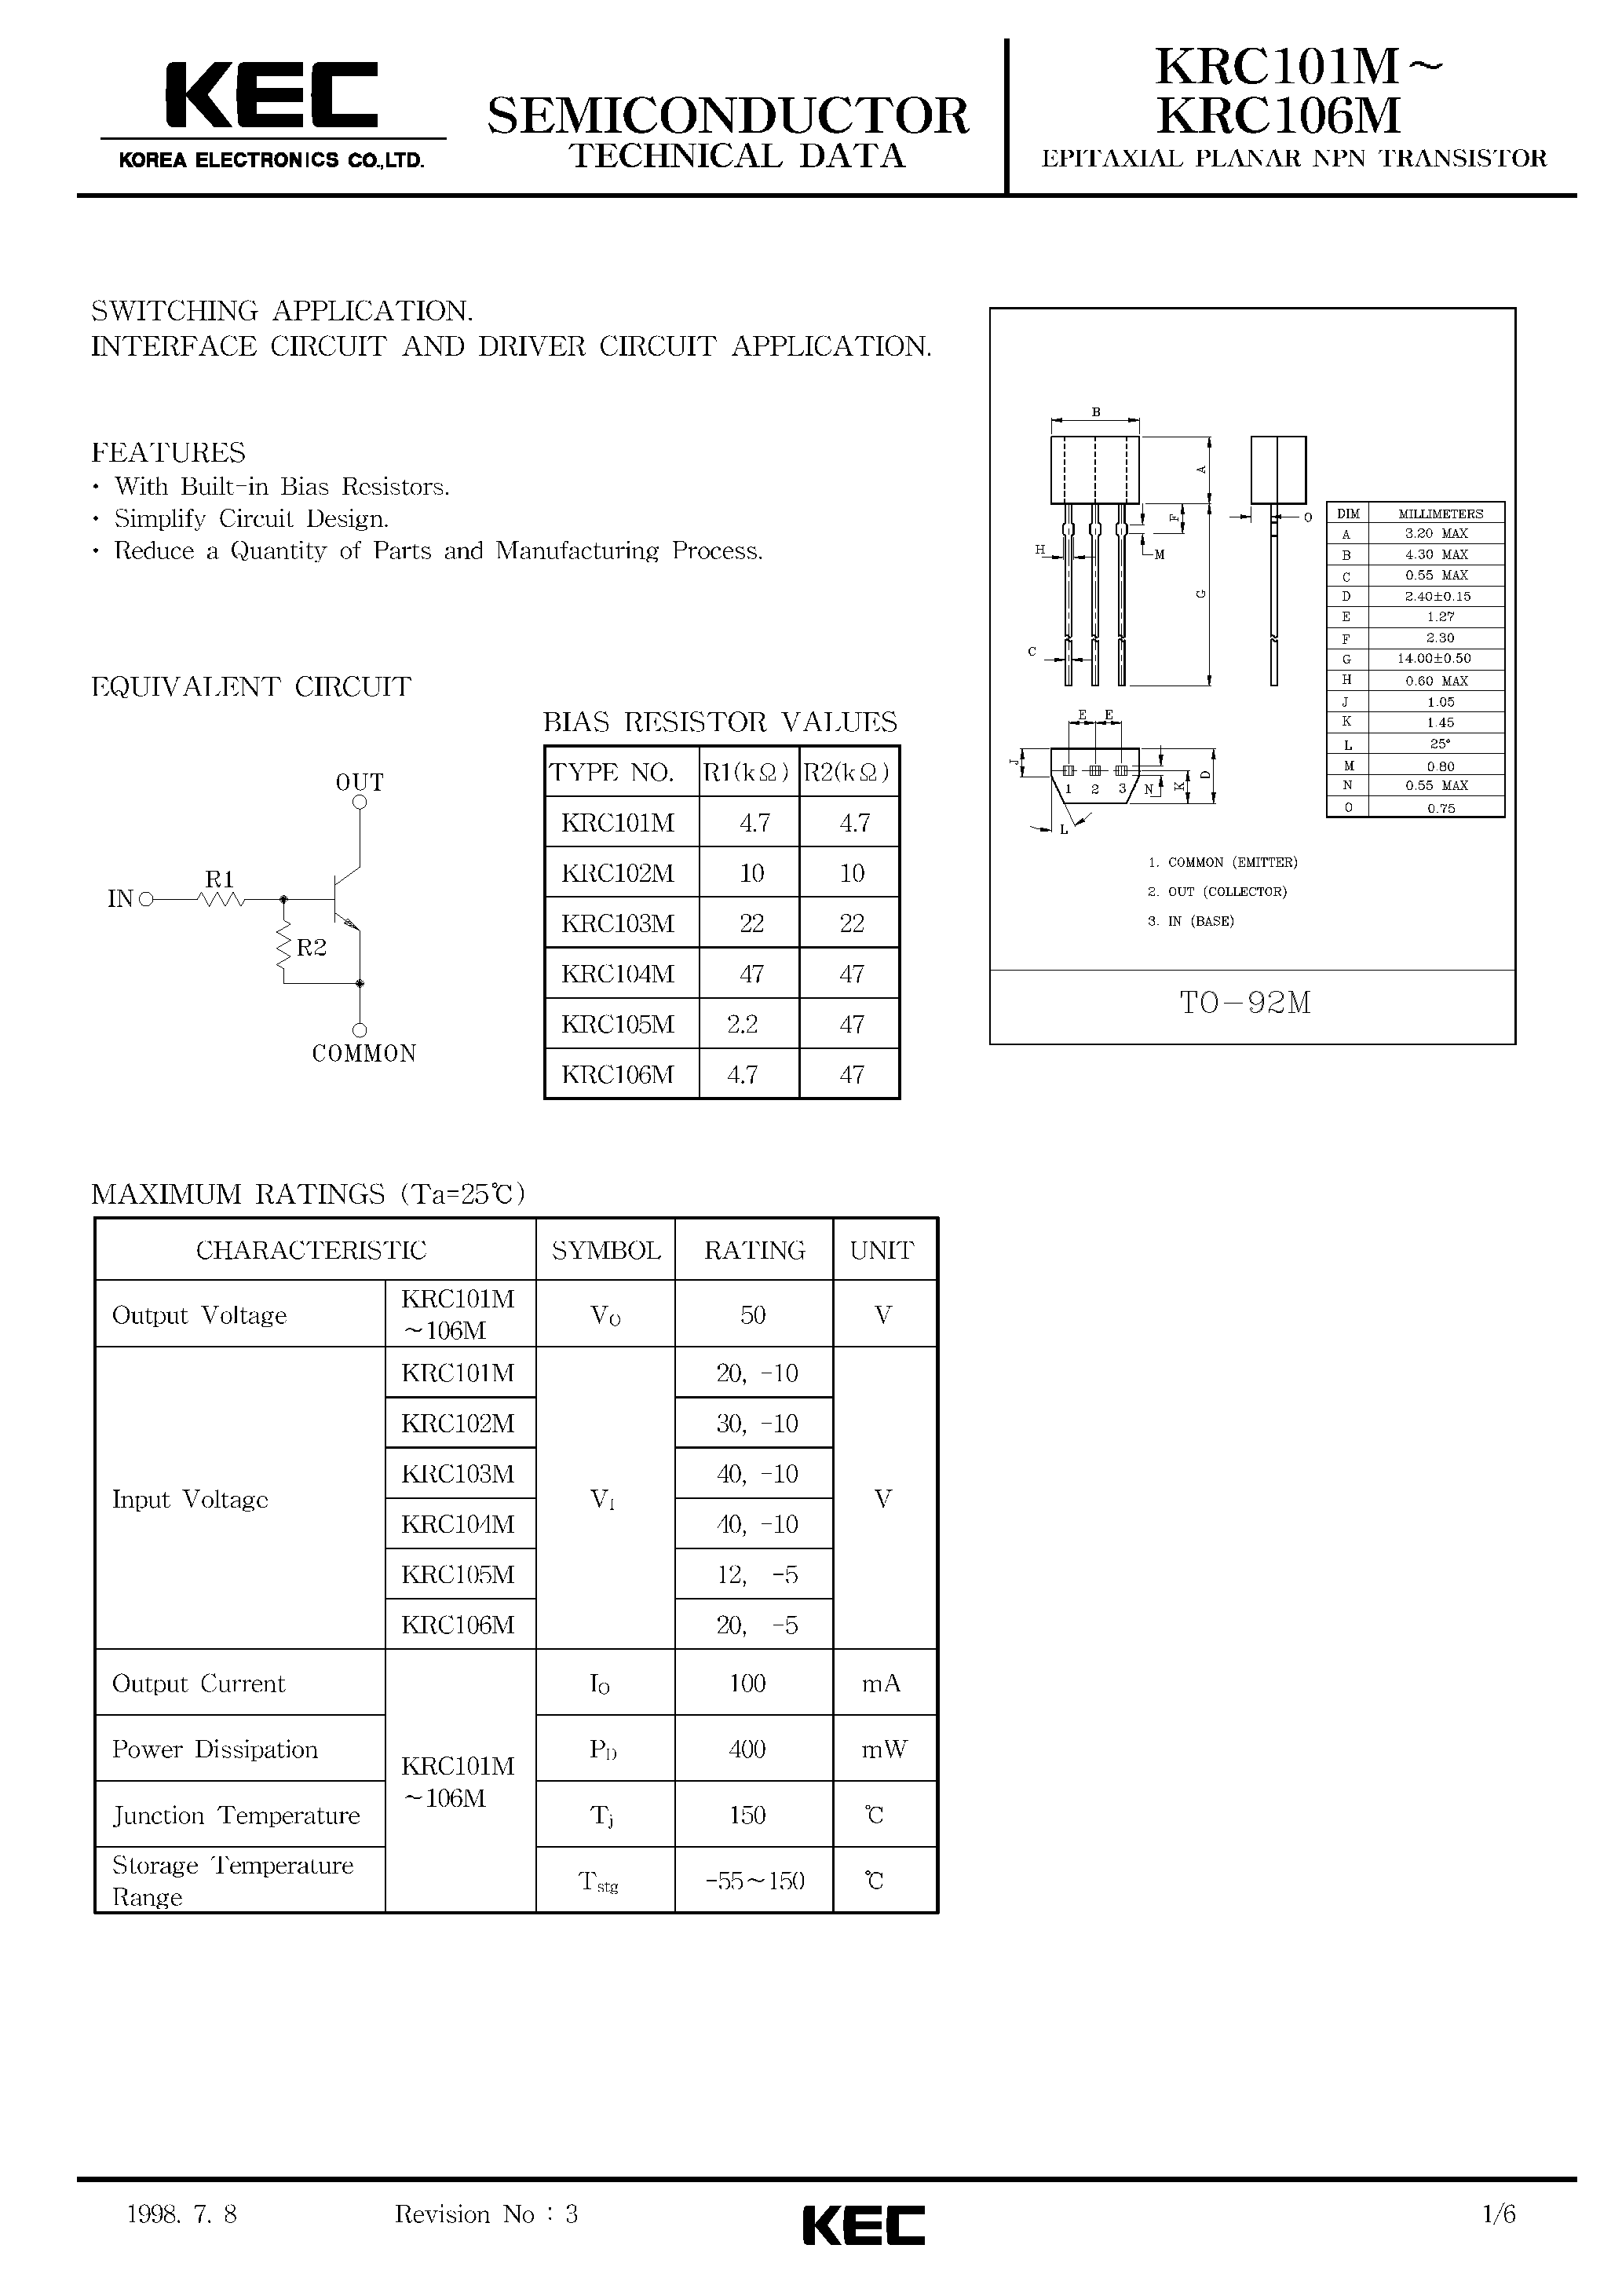 Datasheet KRC101M - (KRC101M - KRC106M) EPITAXIAL PLANAR PNP TRANSISTOR page 1